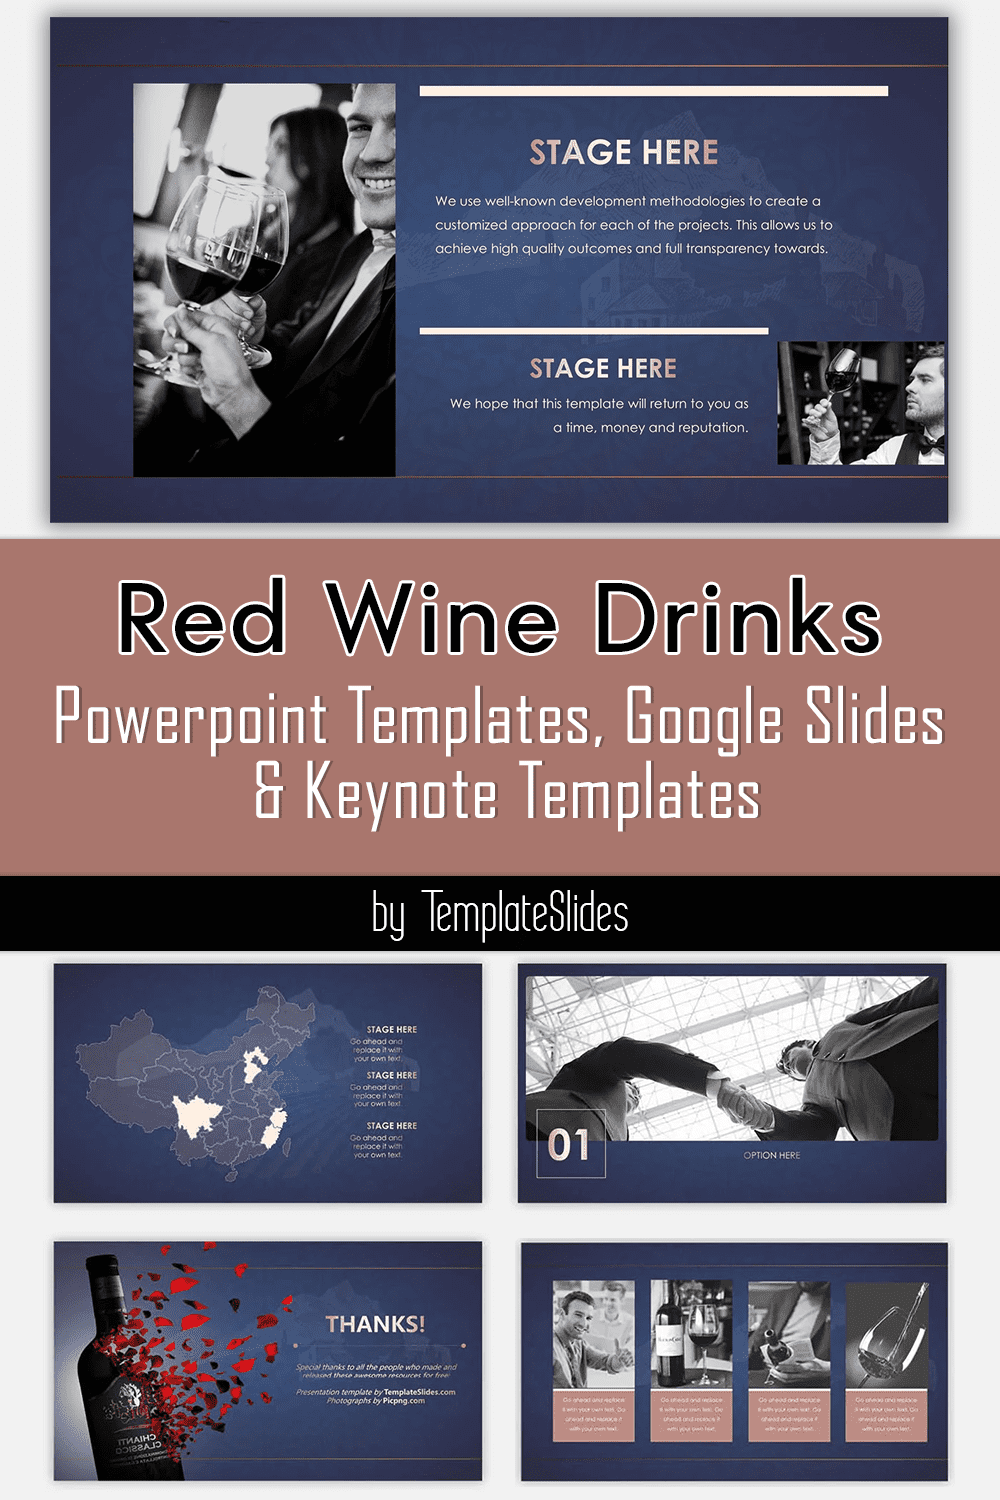 Red Wine Drinks Powerpoint Templates, Google Slides & Keynote Templates - Pinterest.